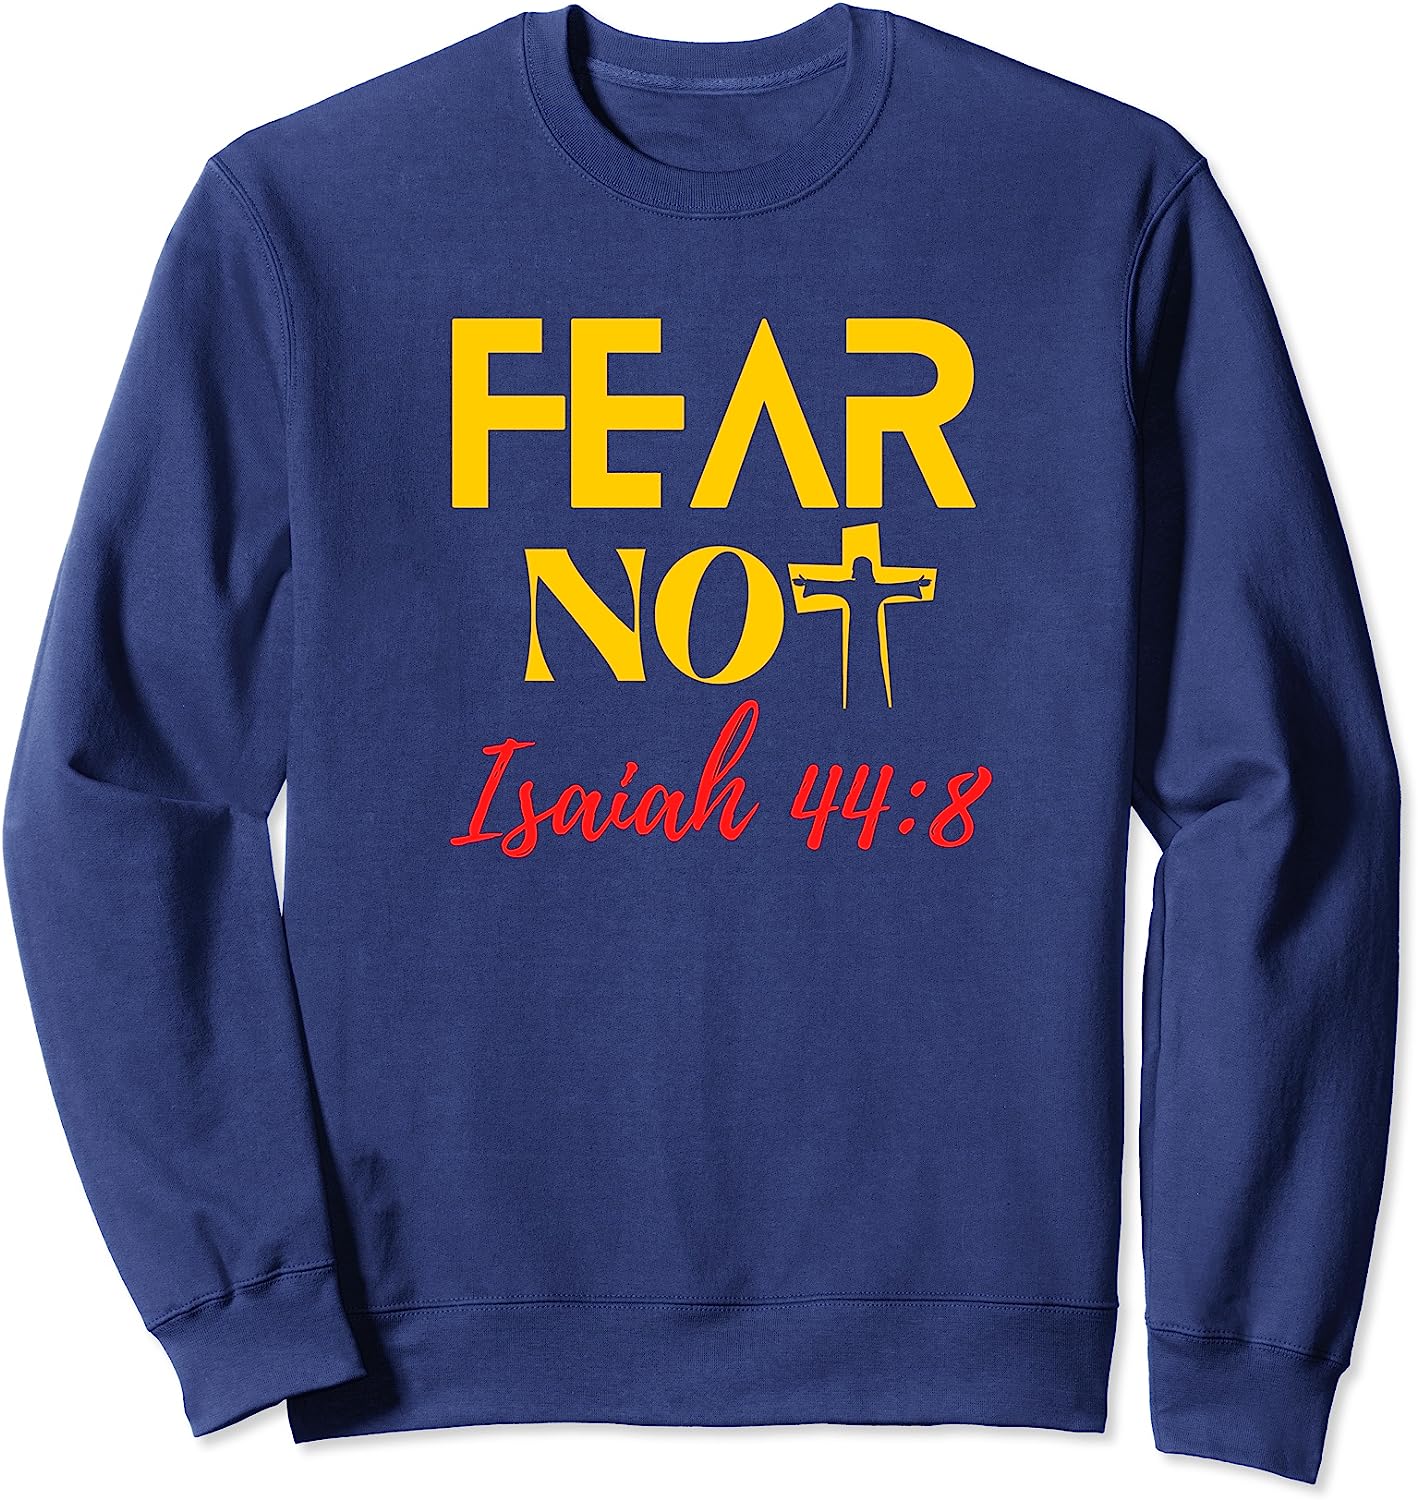 Fear Not - Sweatshirt - Fun, Inspirational Design by Crucial Key